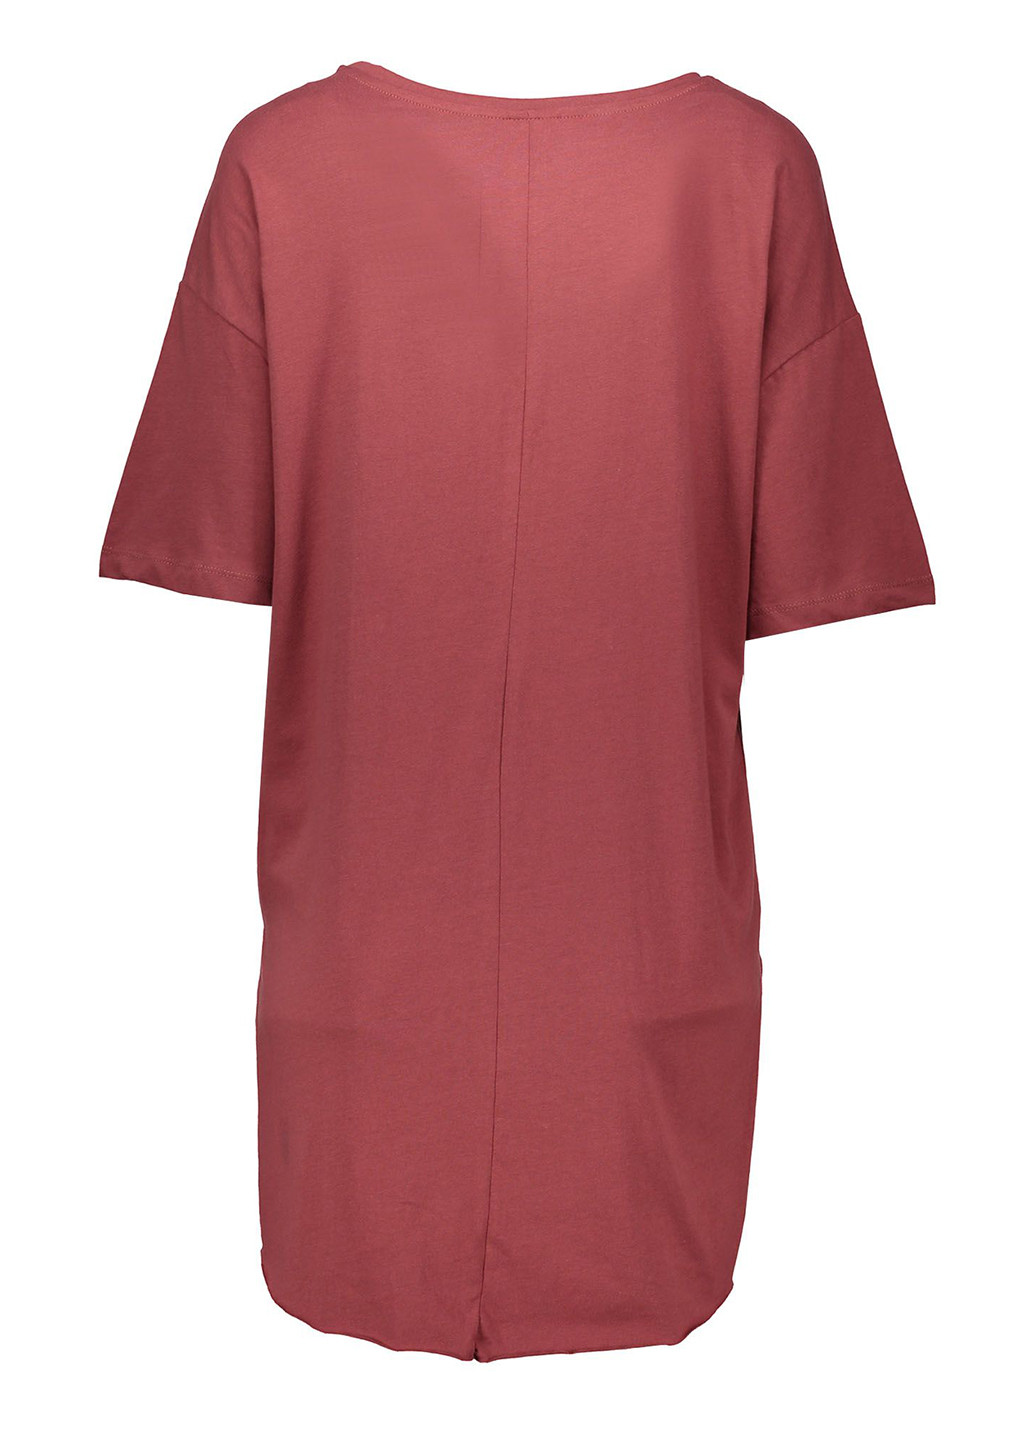 Красная летняя футболка с коротким рукавом Piazza Italia